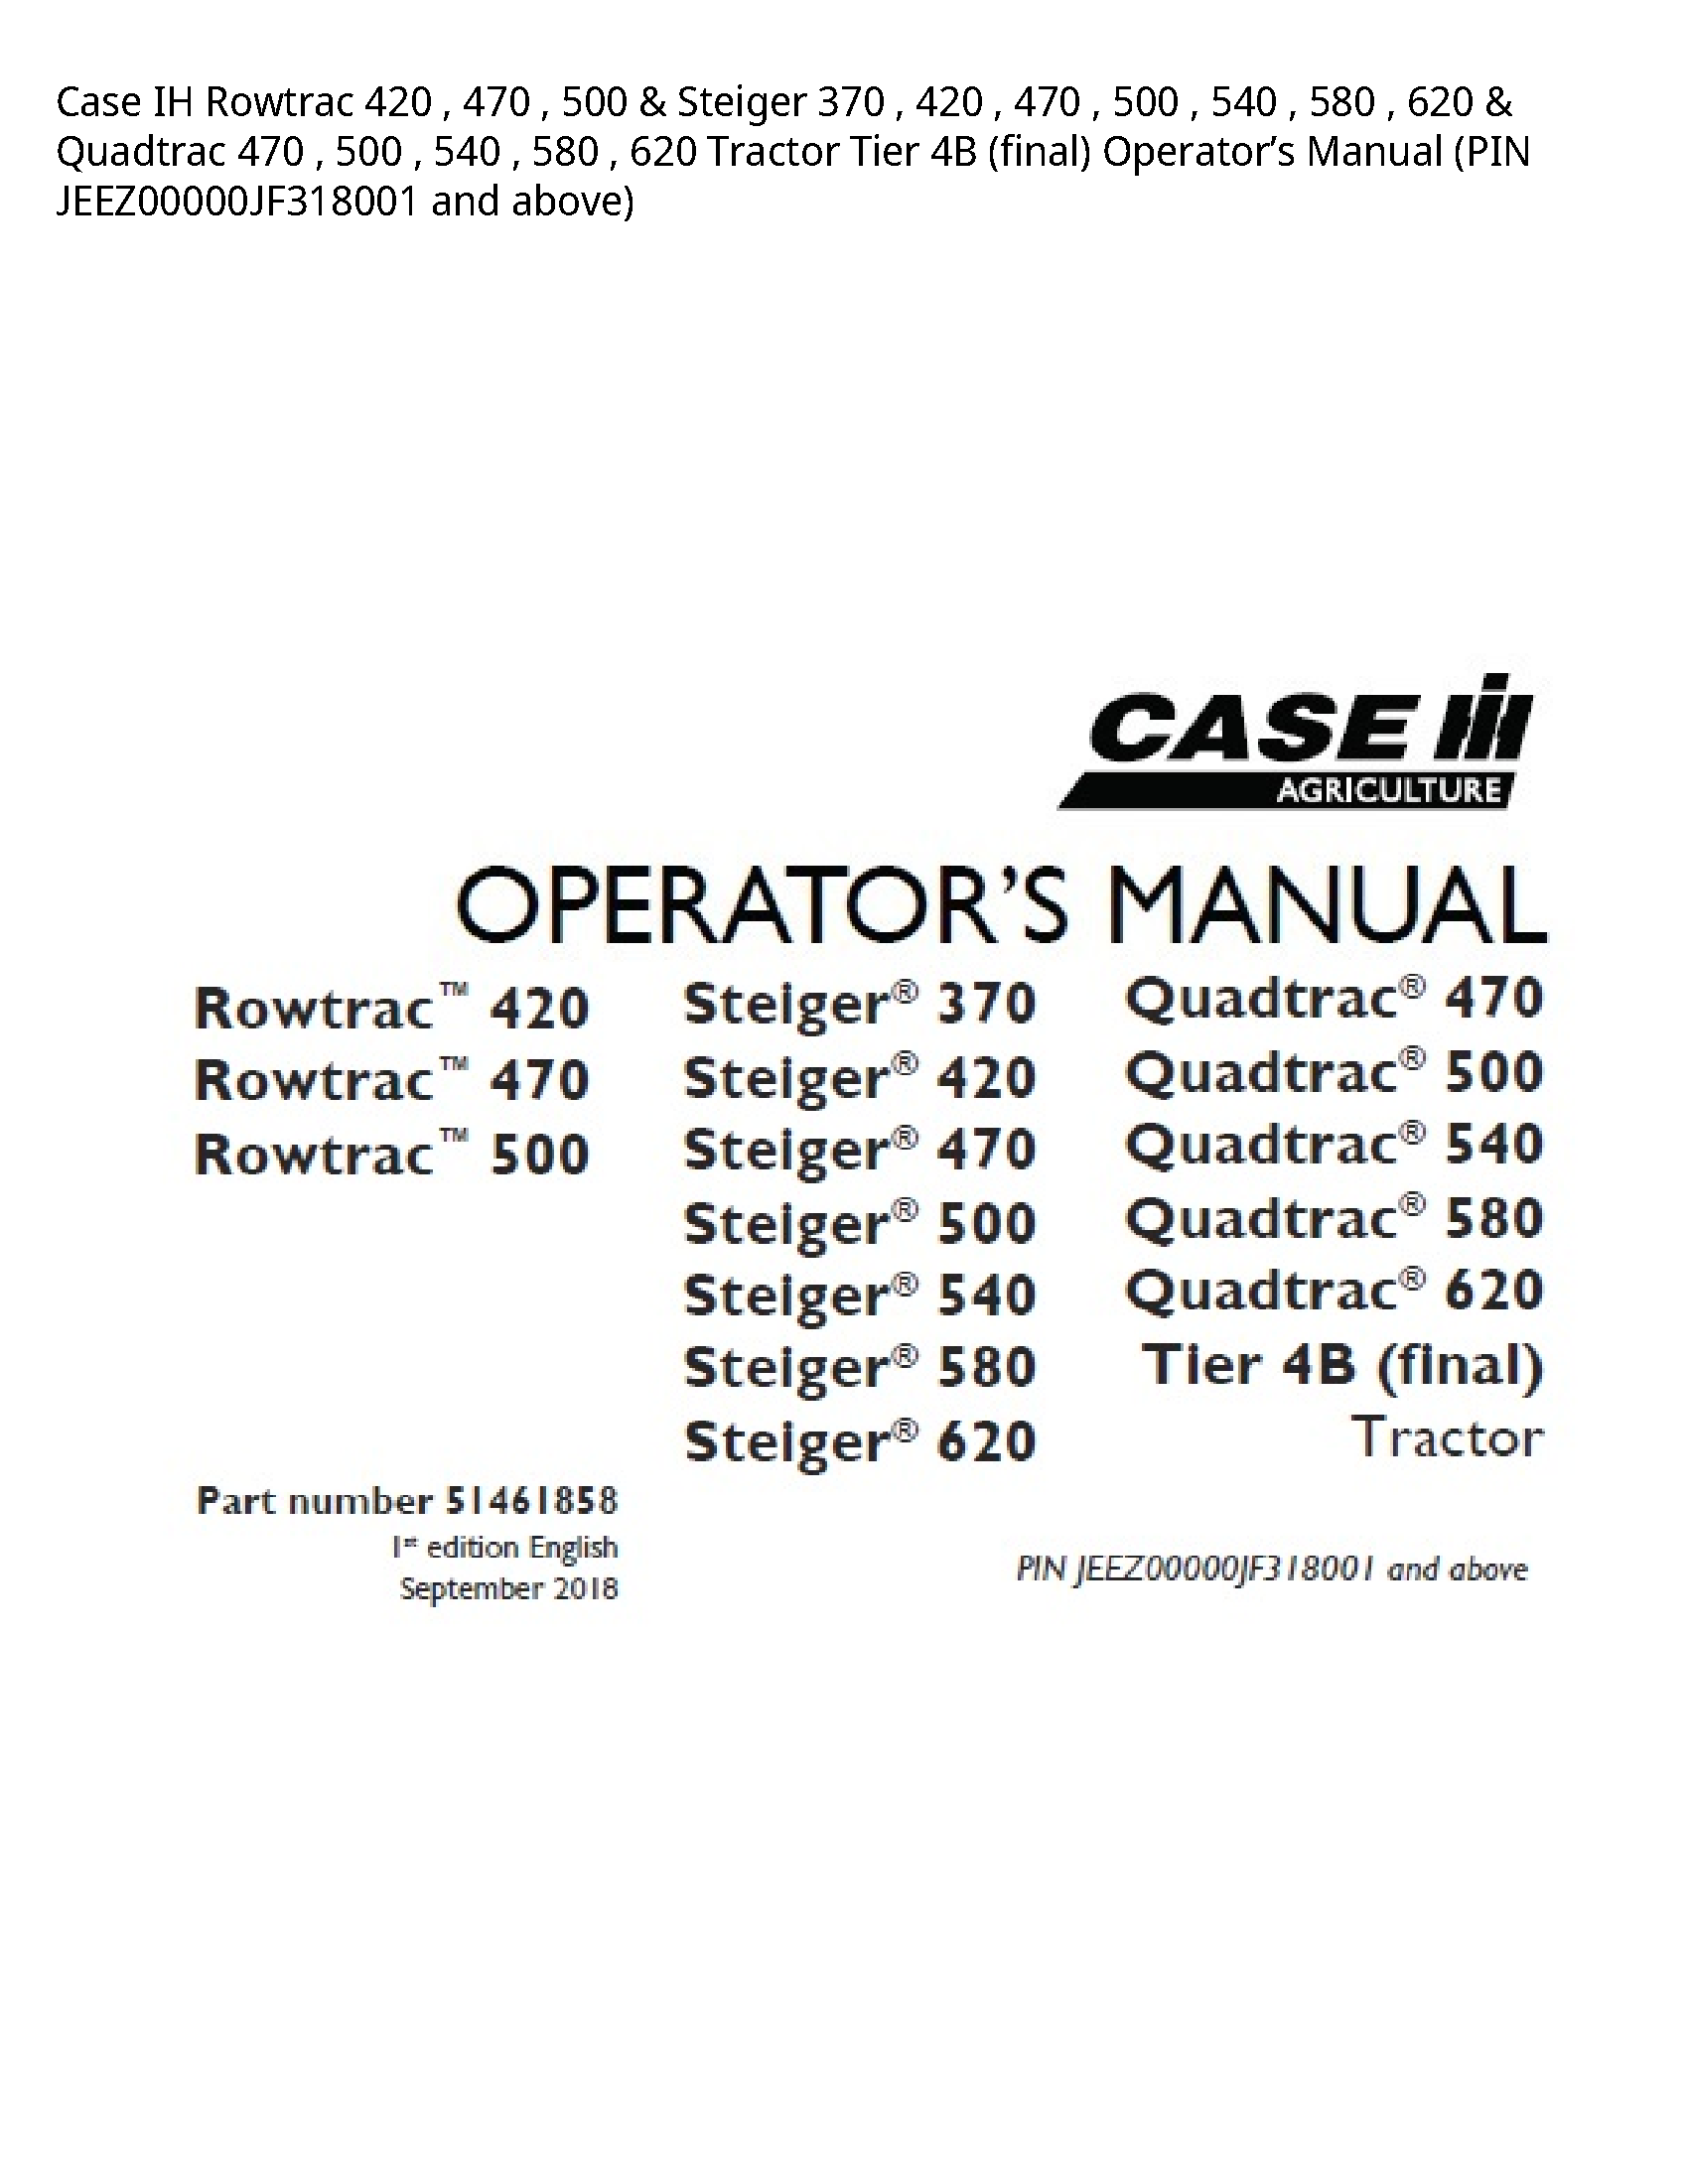 Case/Case IH 420 IH Rowtrac Steiger Quadtrac Tractor Tier (final) Operator’s manual